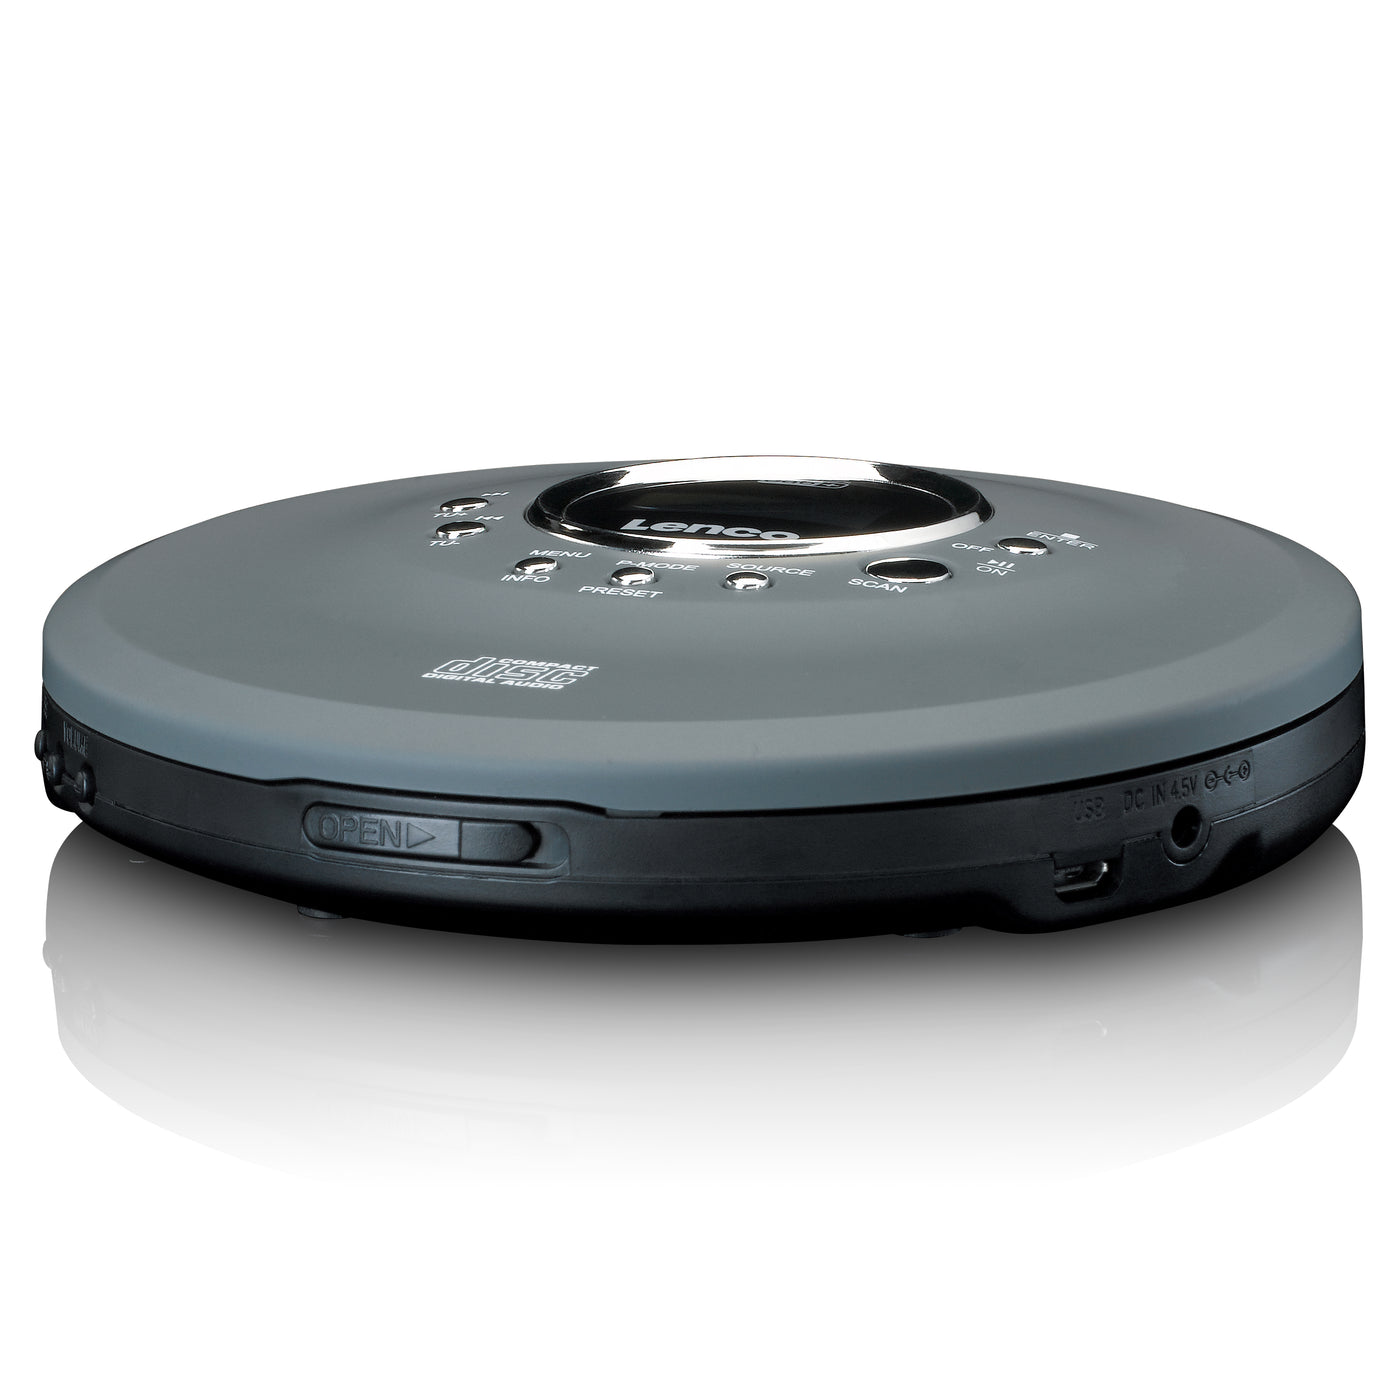 Lenco CD-400GY - Lecteur CD/ MP3 portable pour CD, CD-R, CD-RW